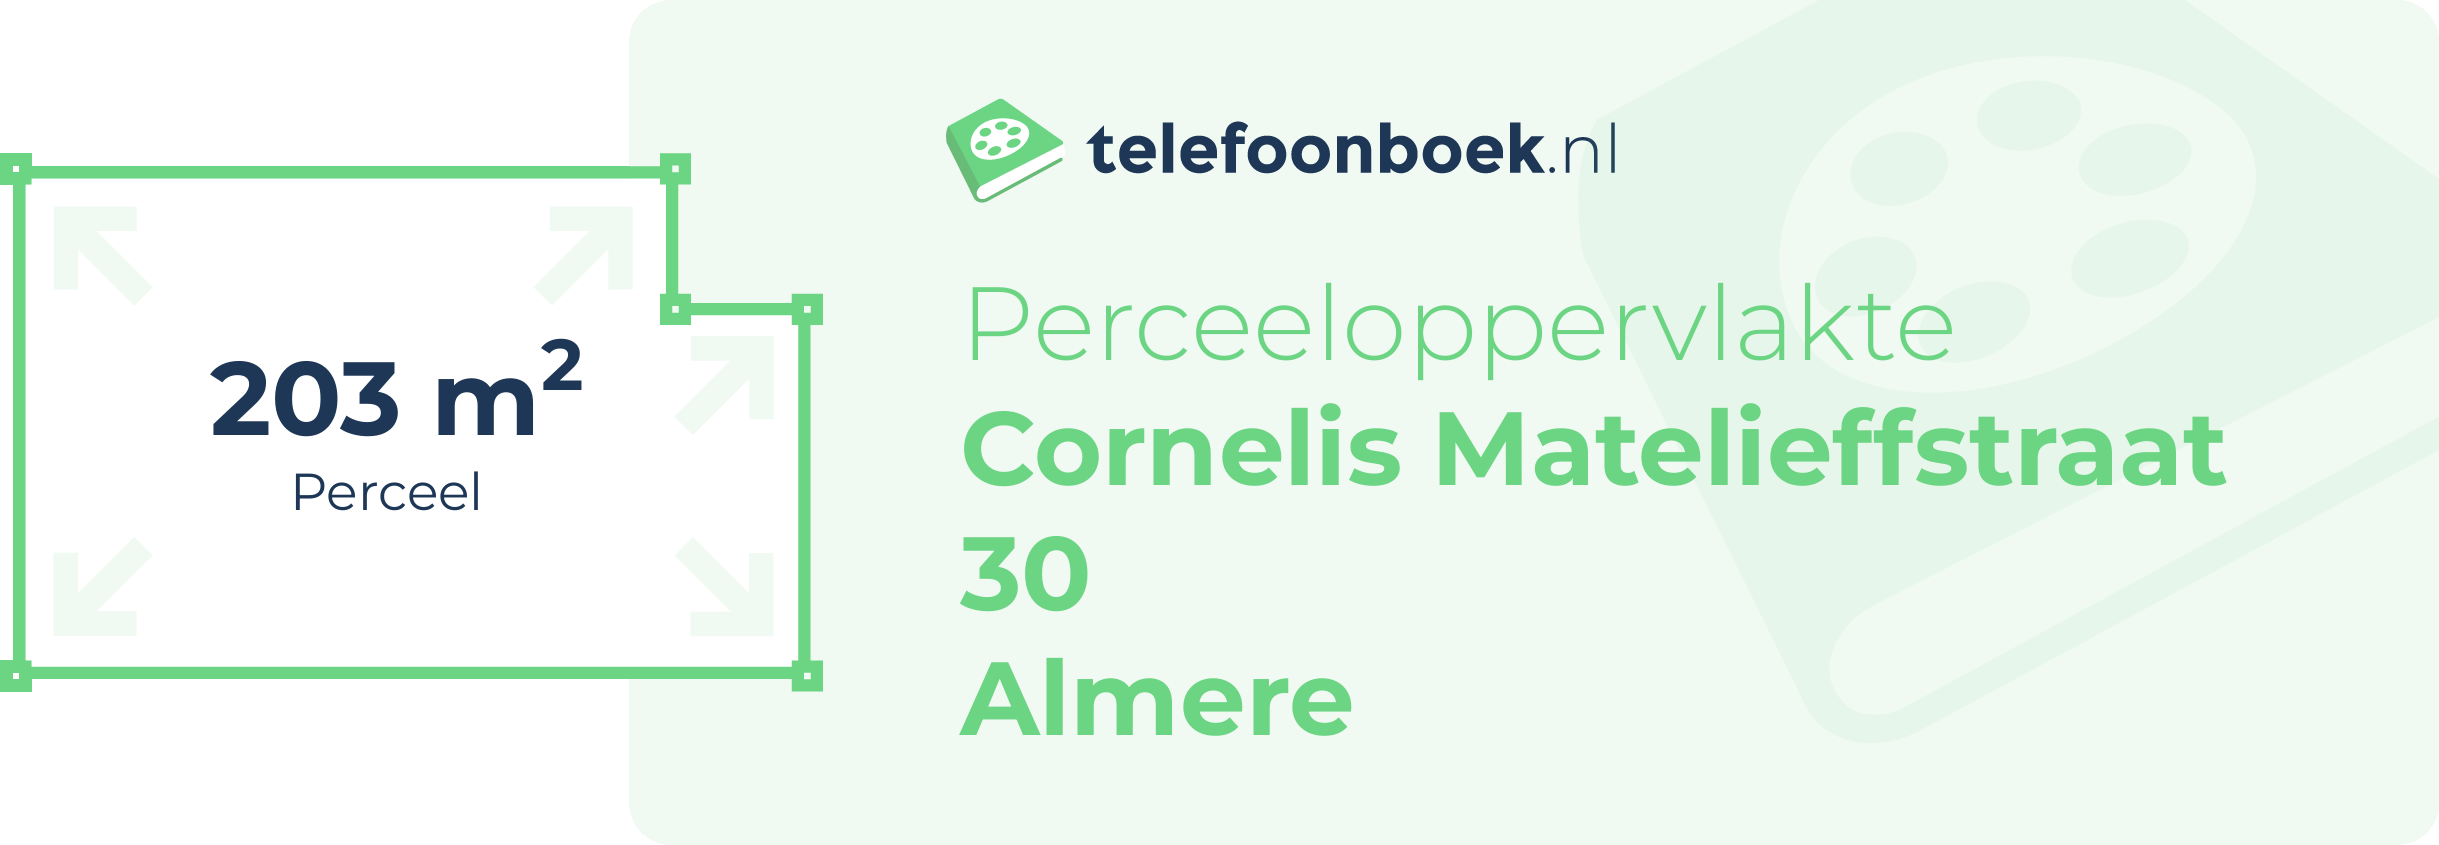 Perceeloppervlakte Cornelis Matelieffstraat 30 Almere